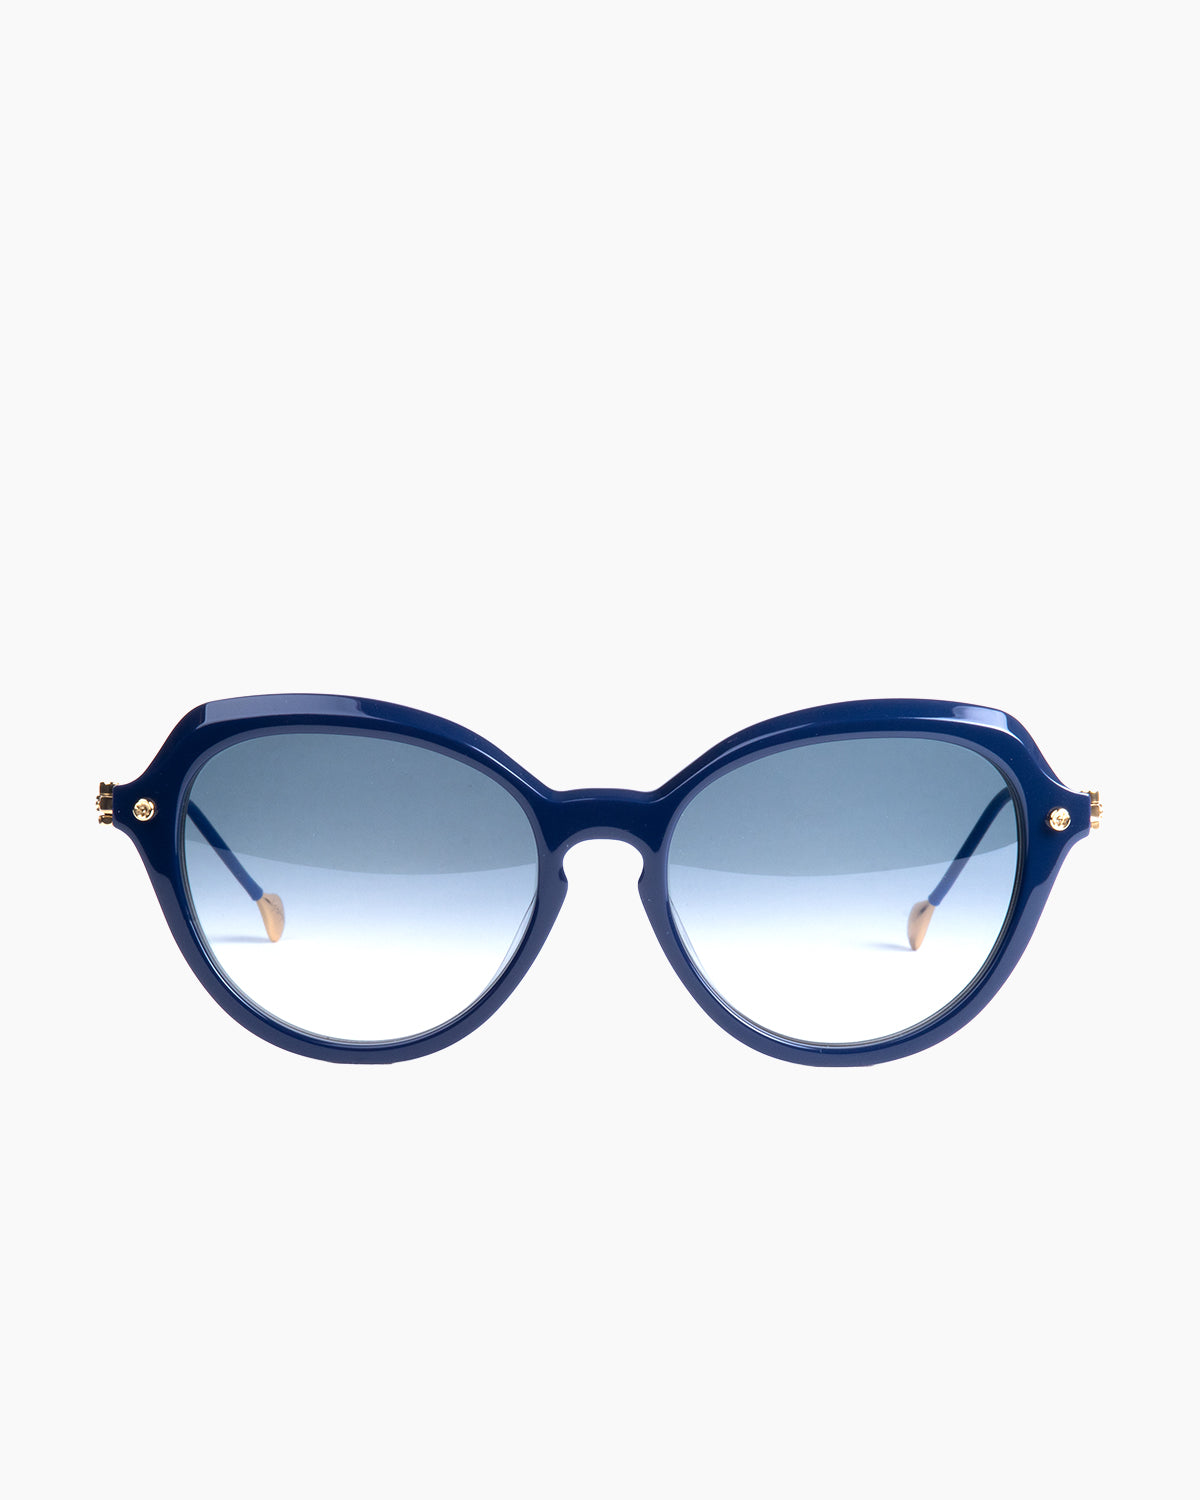 Yohji Yamamoto - Slook008 - m003 | Bar à lunettes:  Marie-Sophie Dion